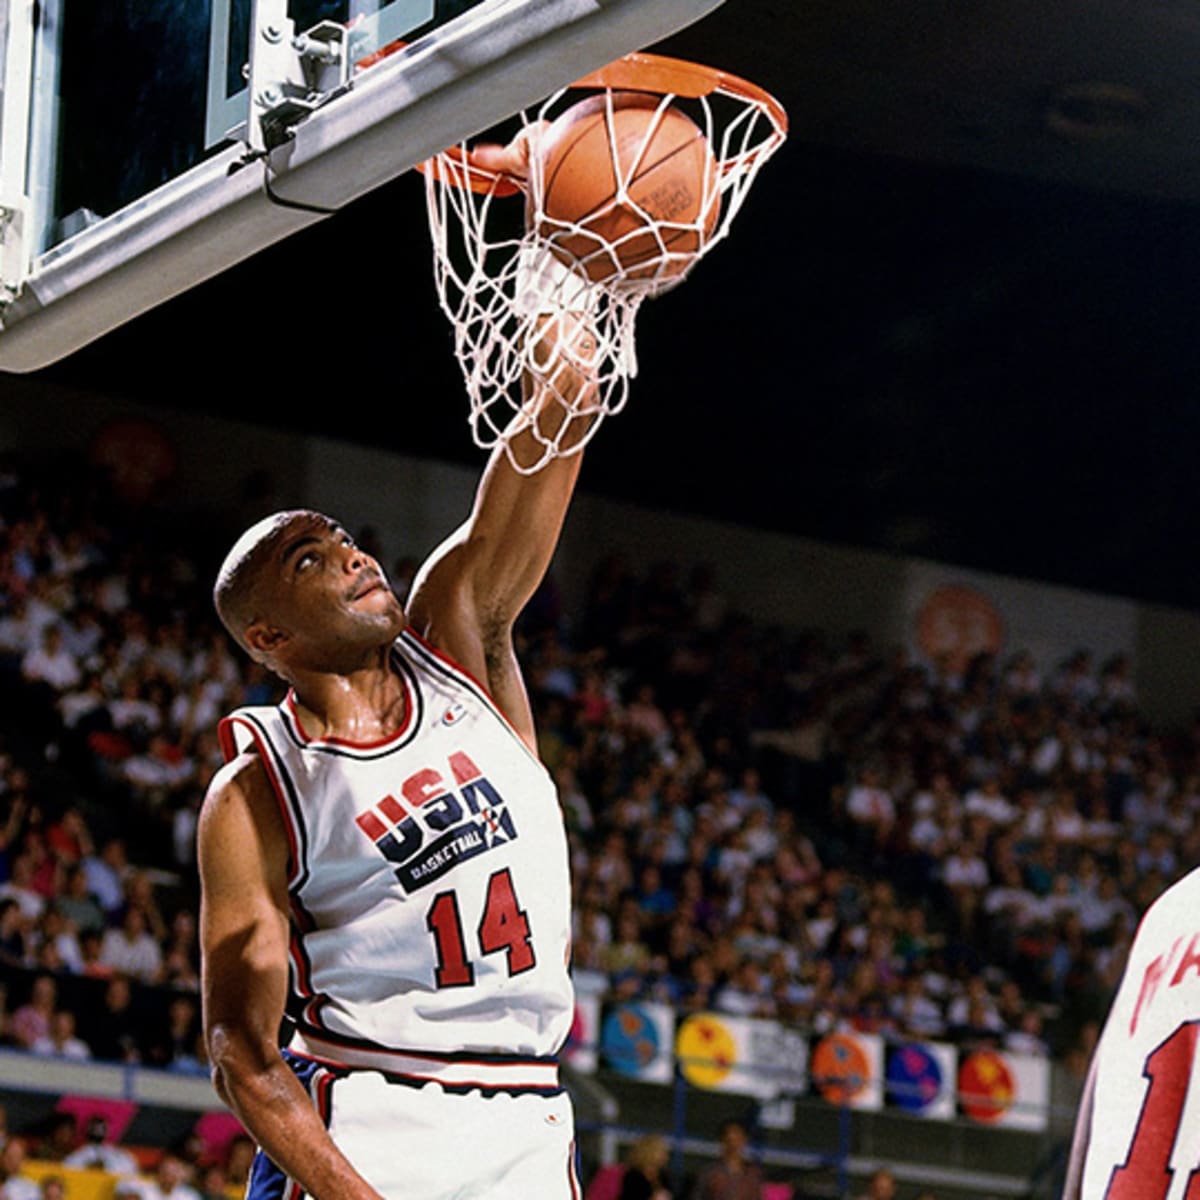 Coach's Corner - 1992 Dream Team multi signed USA Basketball jersey!